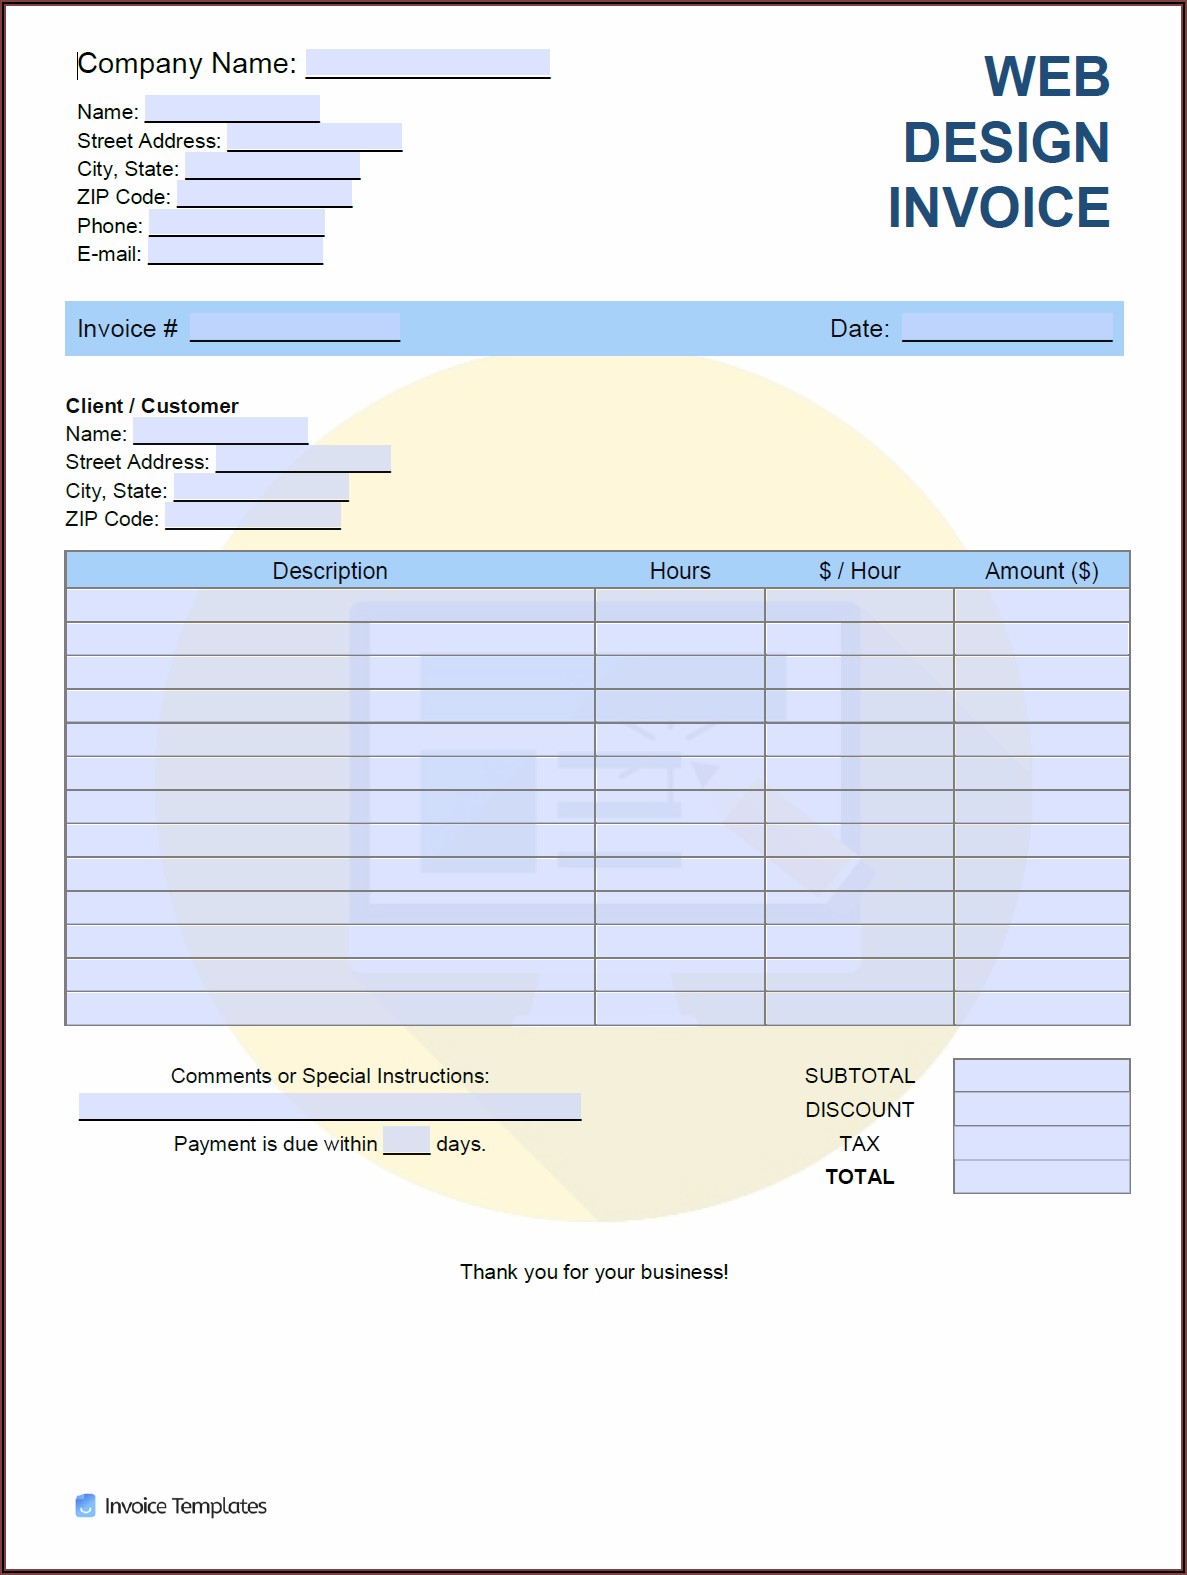 Web Design Invoice Template Excel